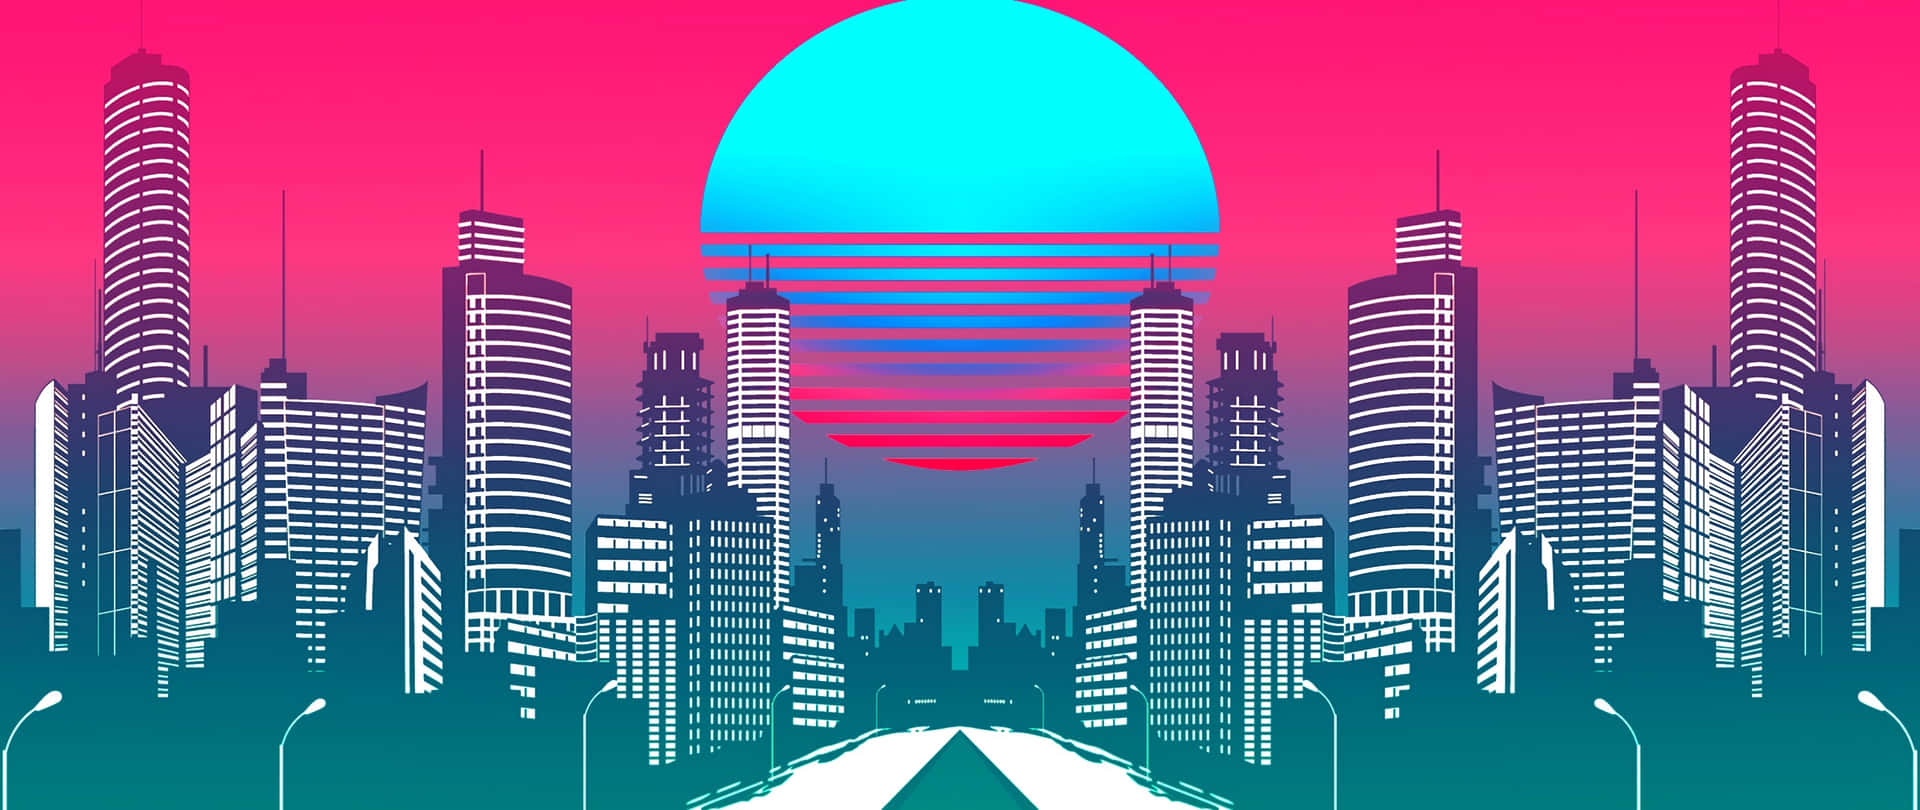 Synthwave City Digital Art Wallpaper